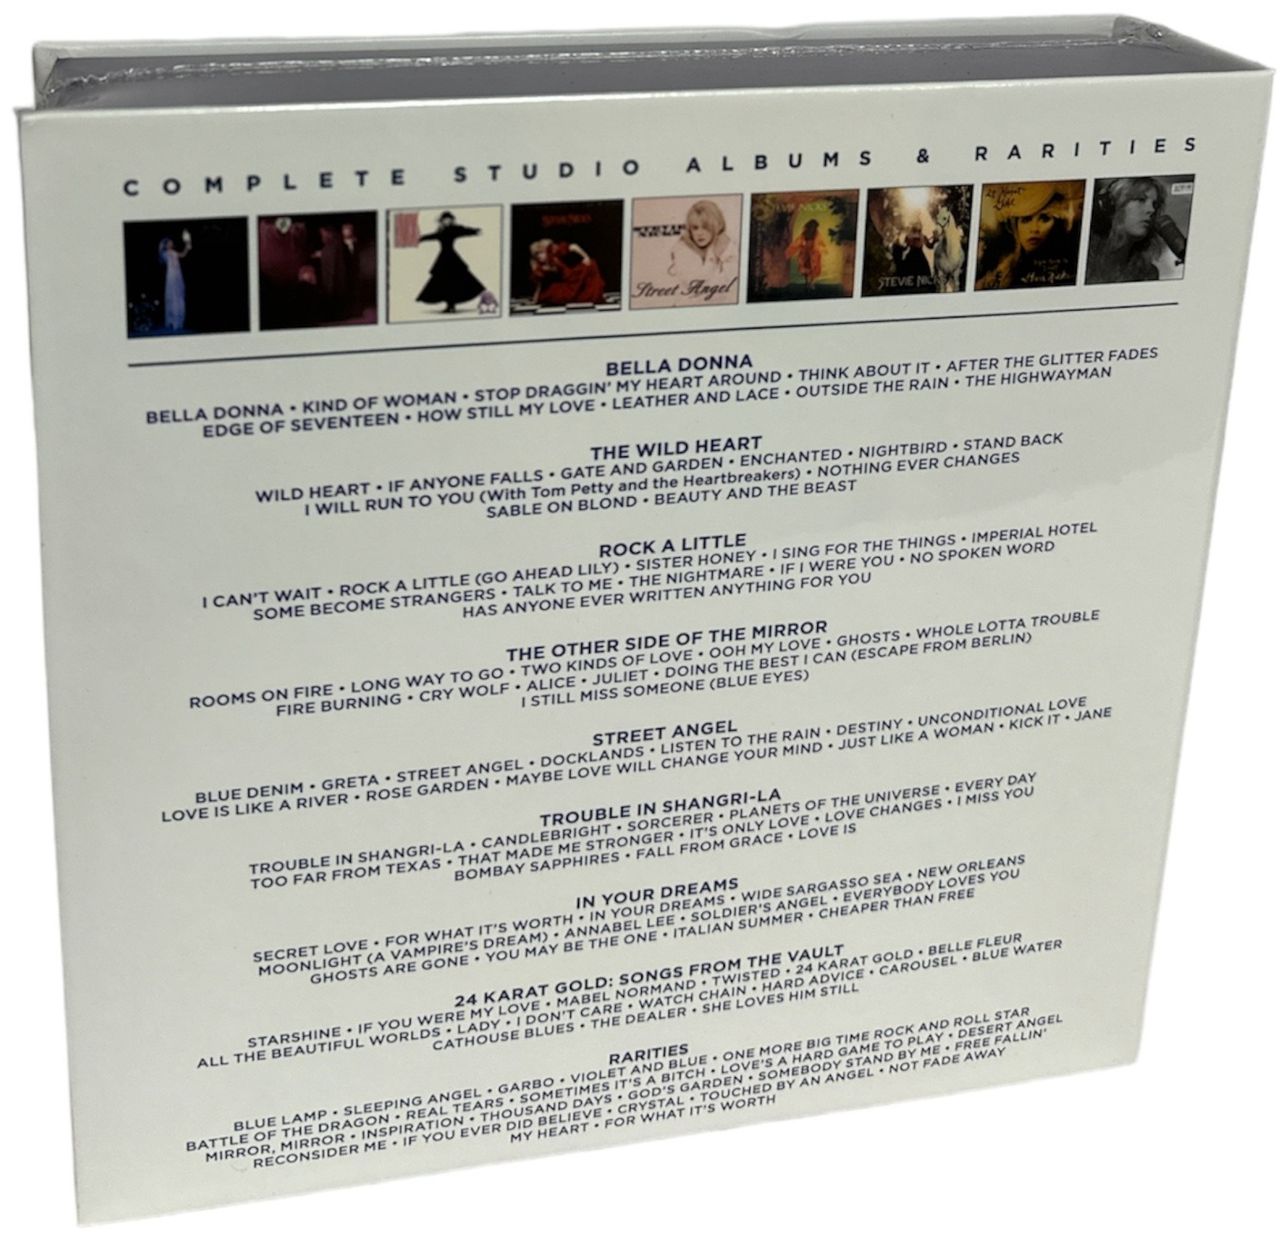 Stevie Nicks Complete Studio Albums & Rarities - 10-CD Box Set UK